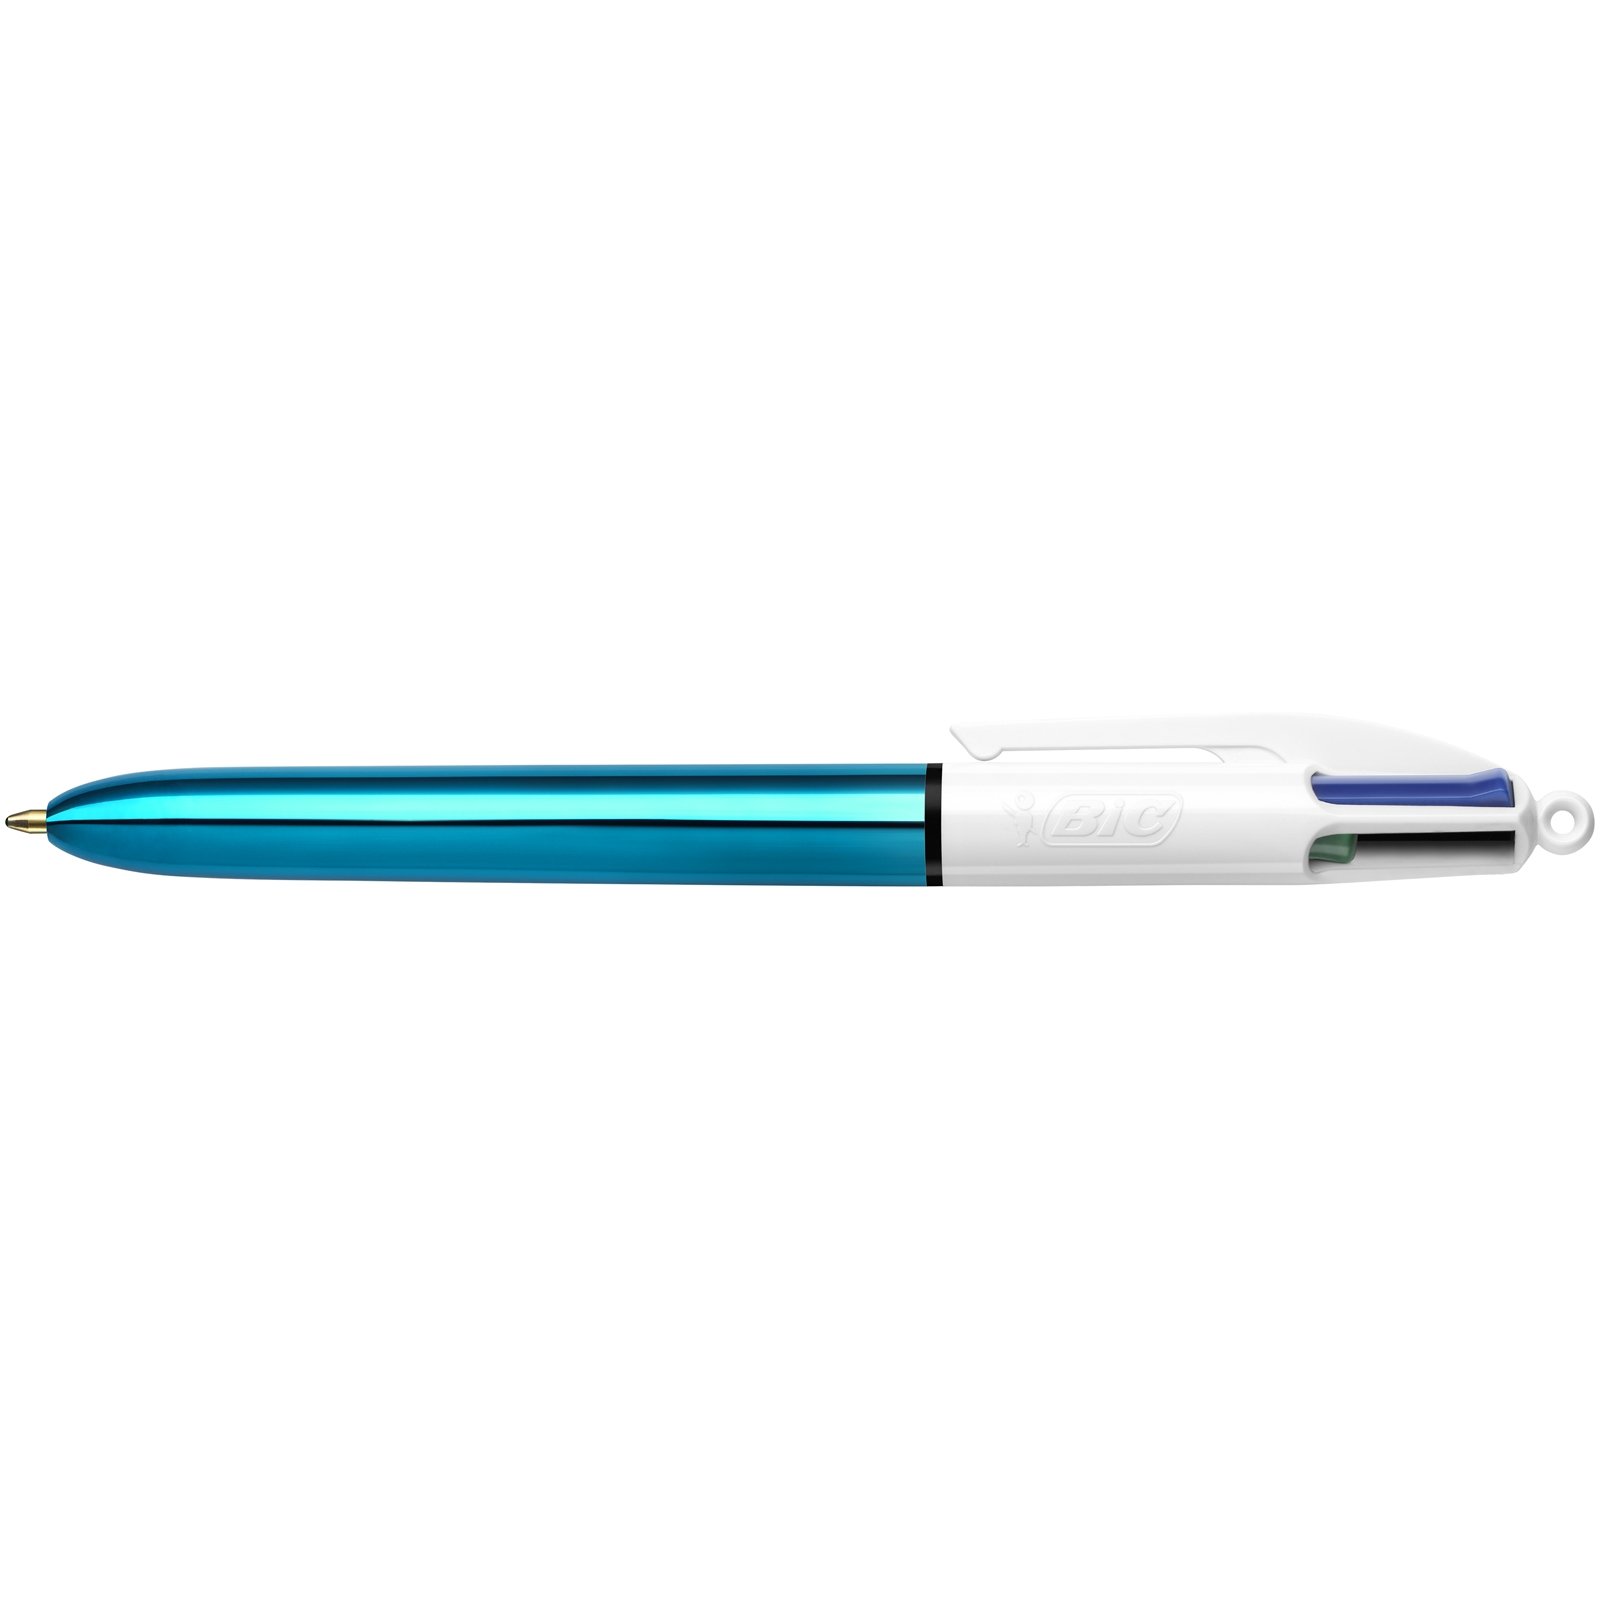 Ручка шариковая BIC 4 Colours Shine Blue, 1 мм, 4 цвета, 1 шт. (982874) - фото 2